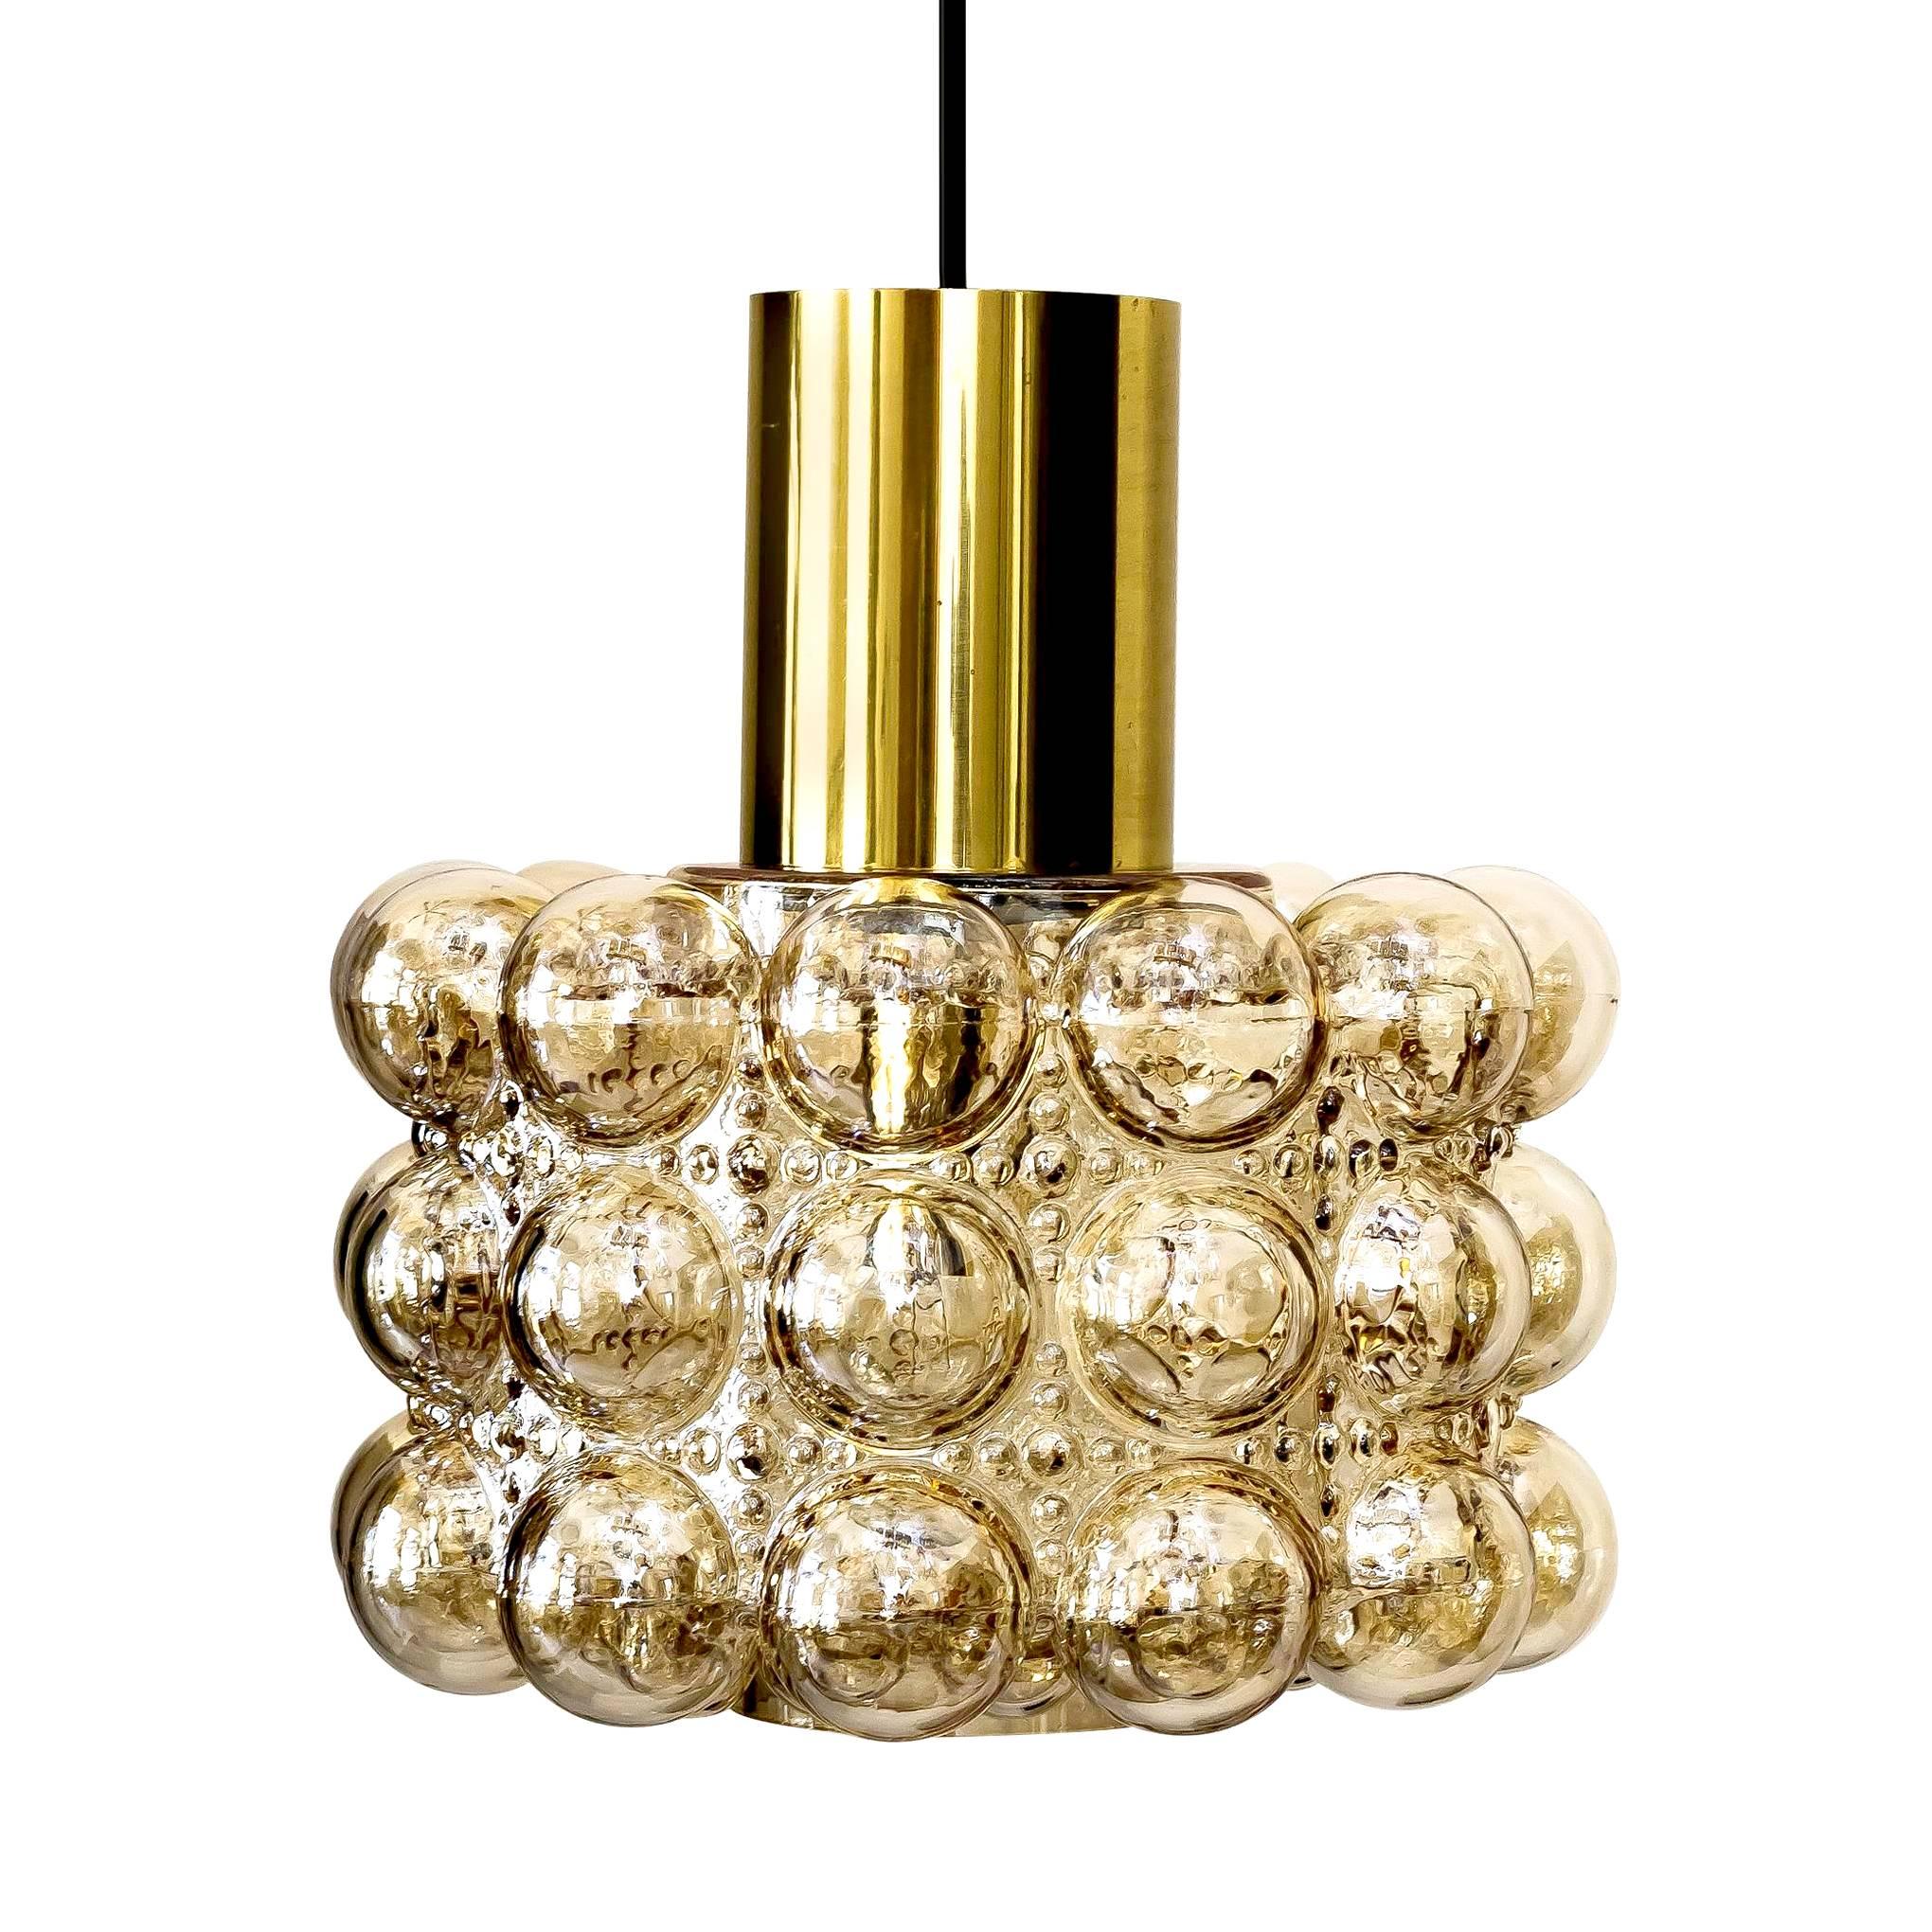 Limburg MidCentury Bubble Glass Brass Chandelier Pendant Light, Gio Ponti Era For Sale